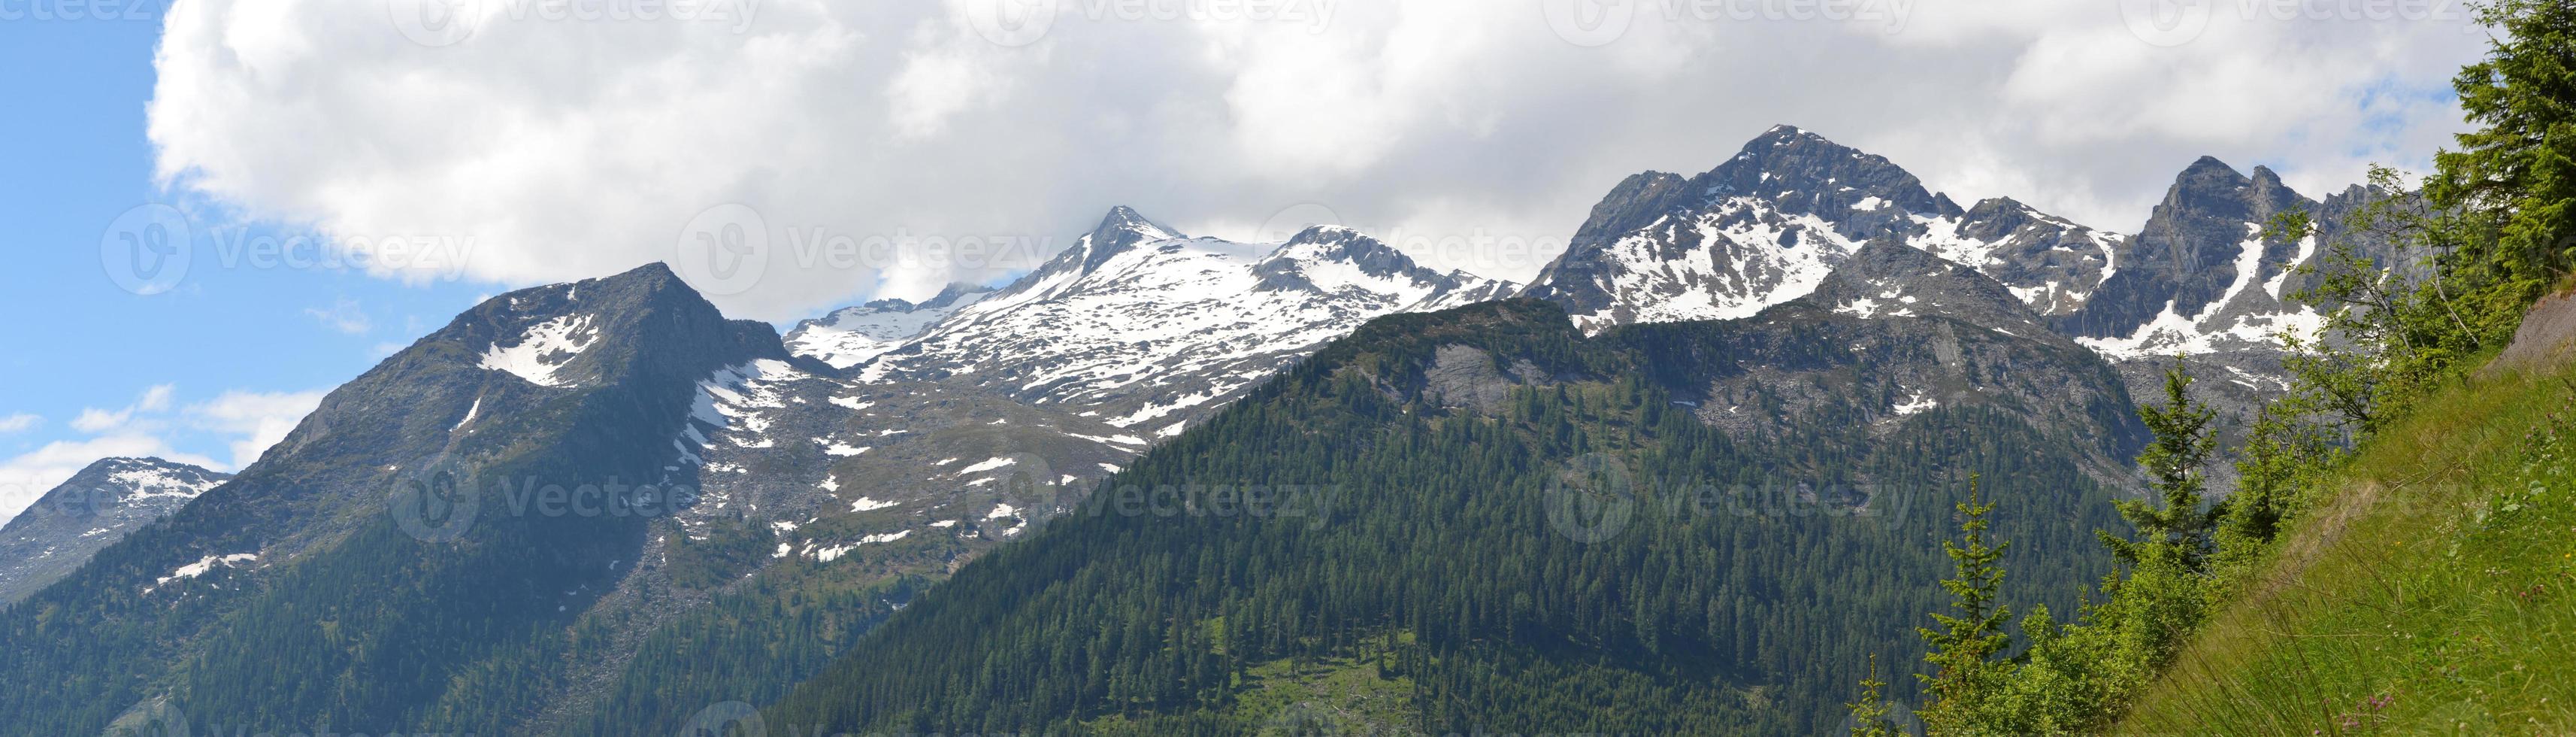 snö på toppar av alps bergen i österrike - panorama foto